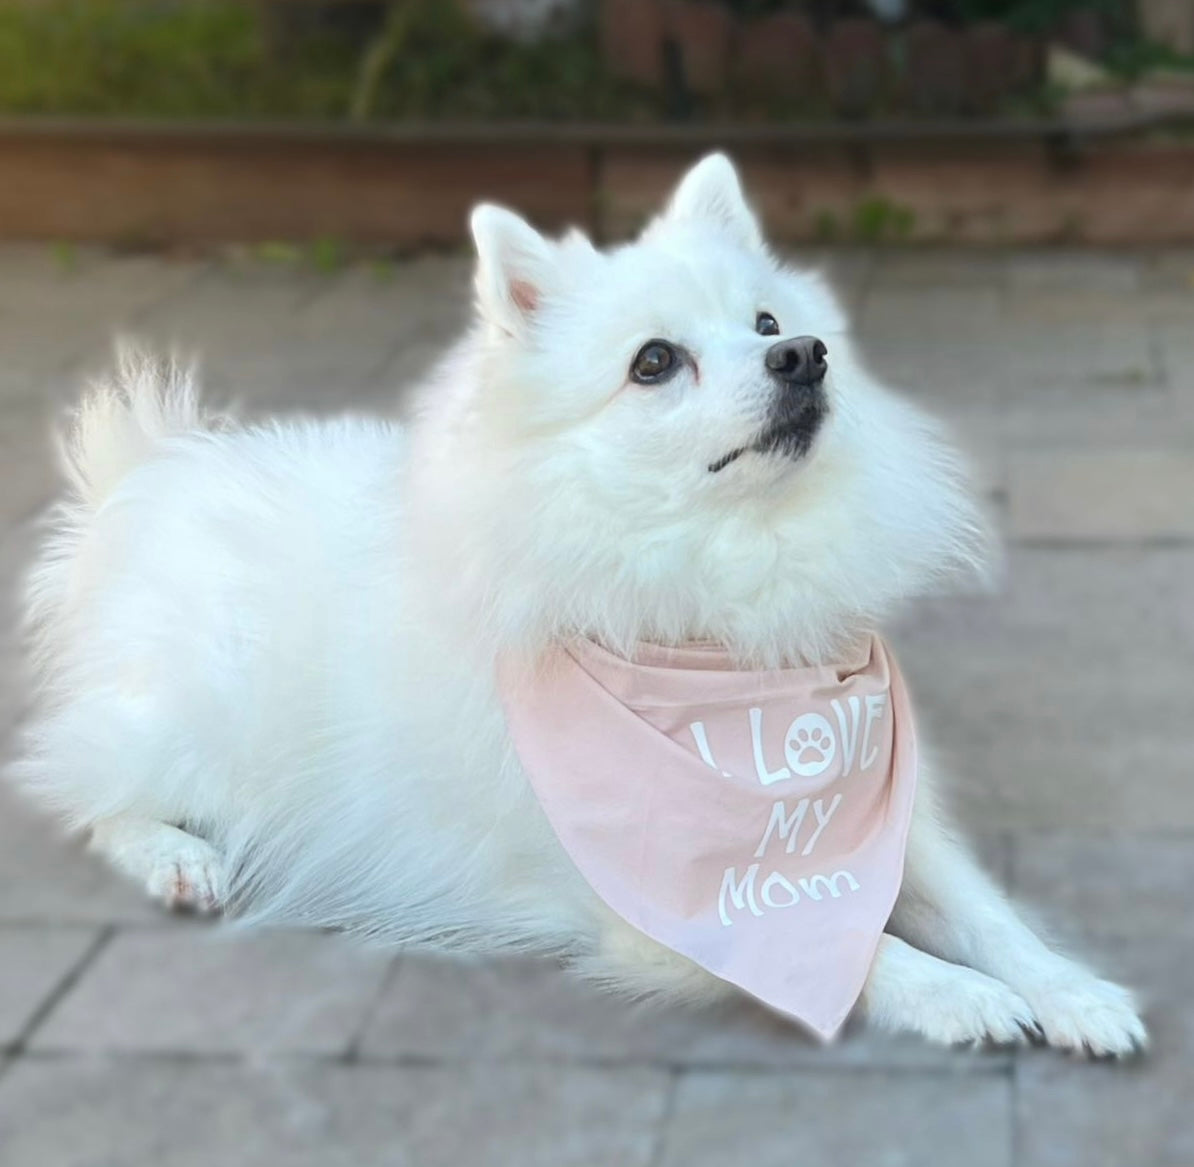 Valentine's Day Dog Mom Cap and "I Love My Mom" Bandana Set